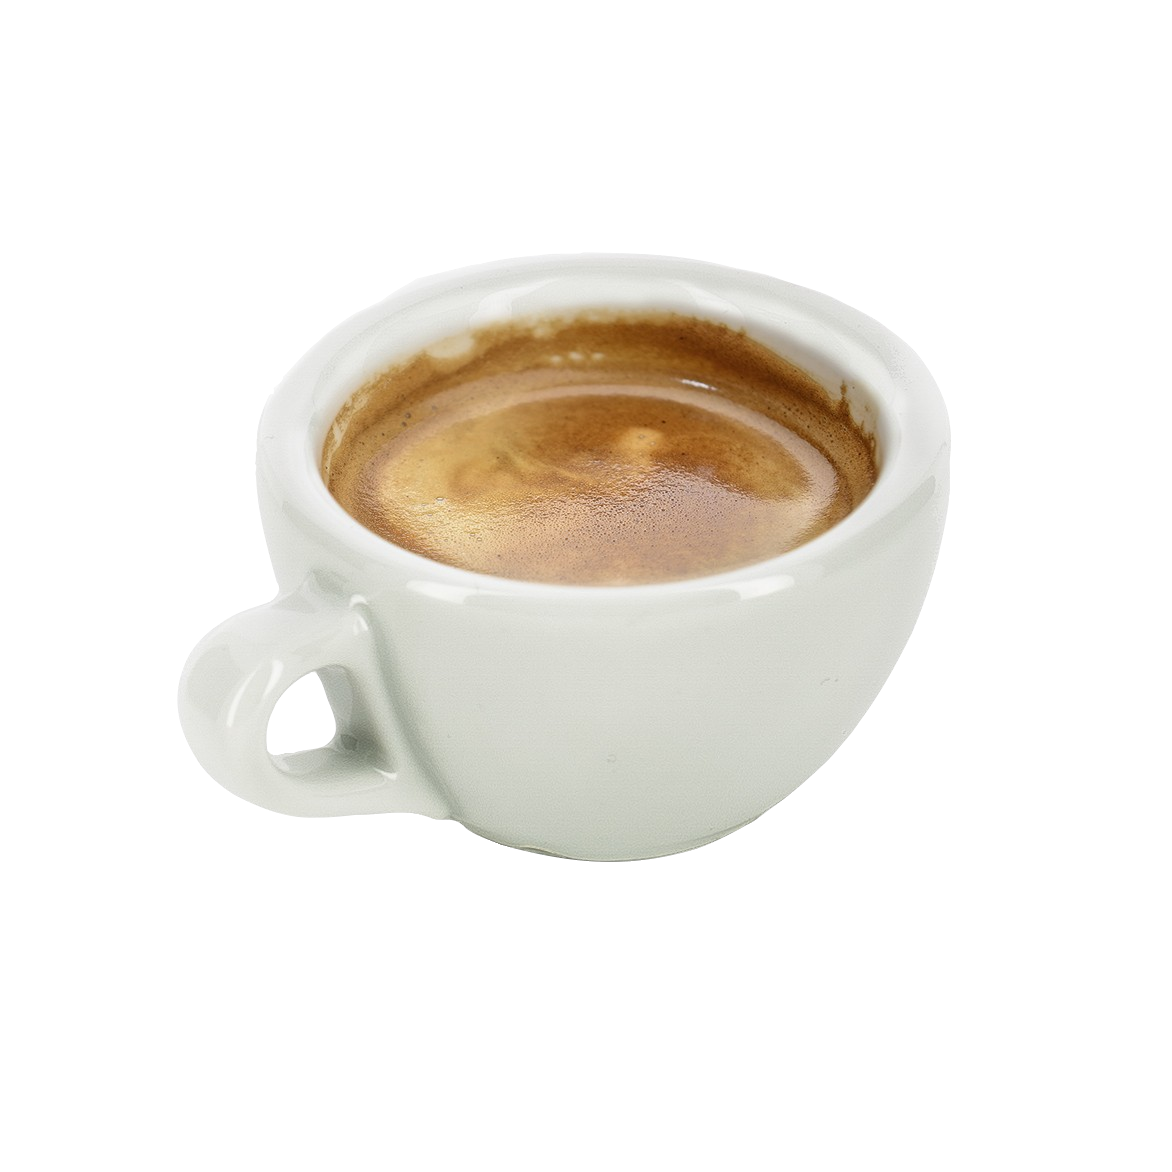 Tazzine caffè napoletane con bordo spesso - Caffèlab